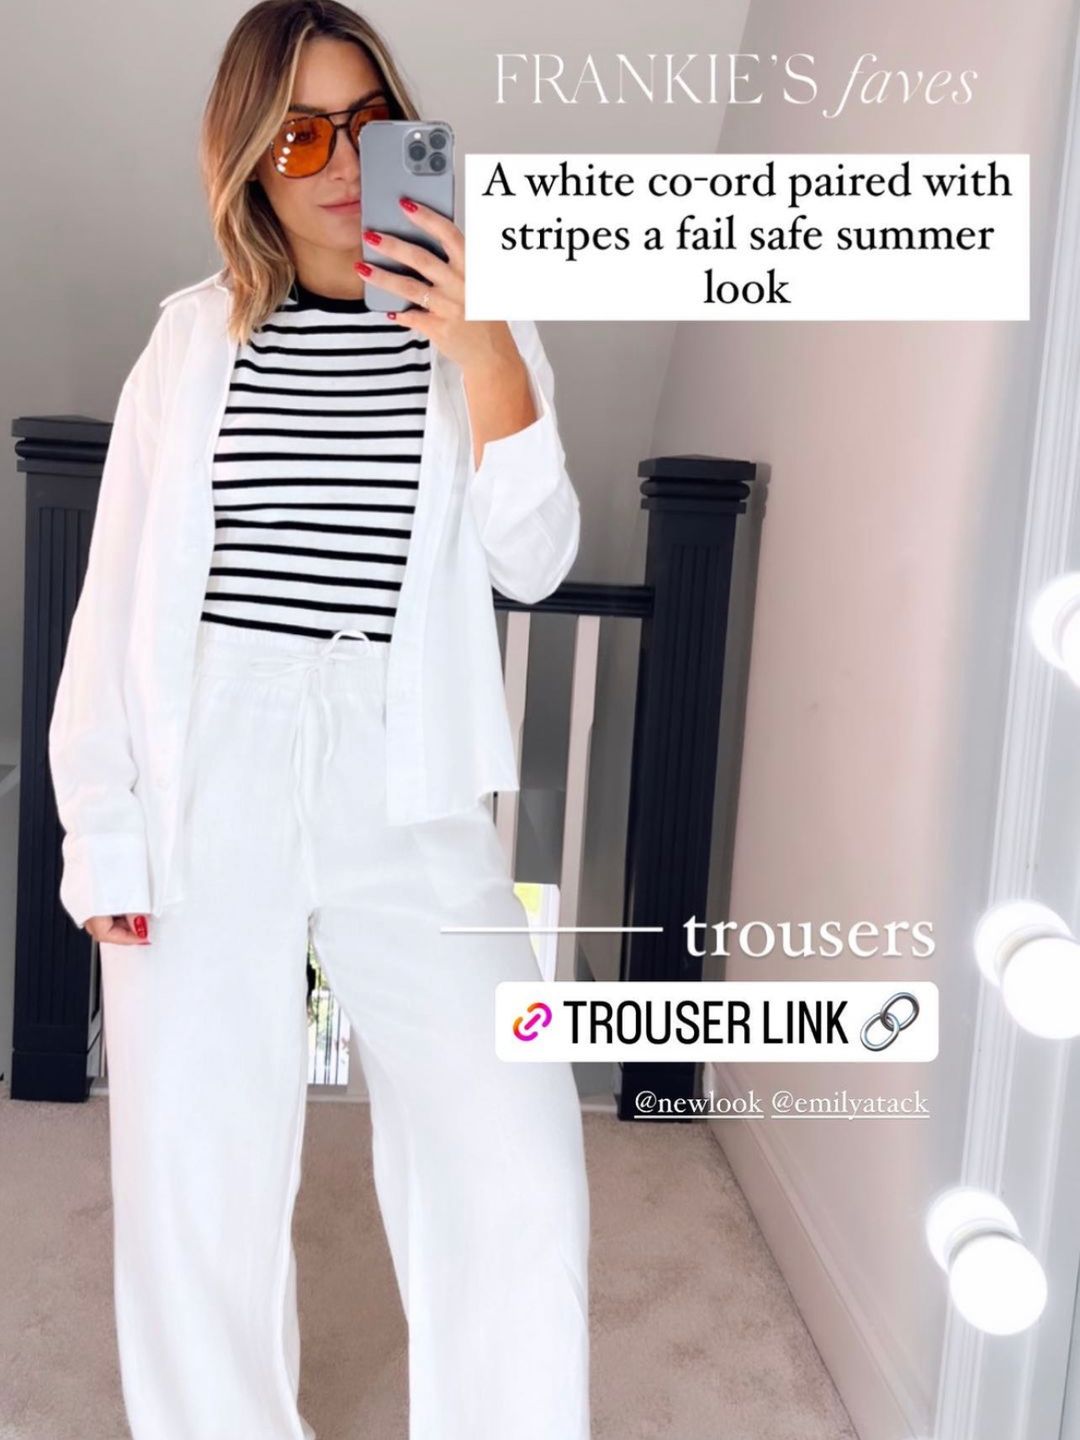 frankie bridge instagram linen trousers and shirt